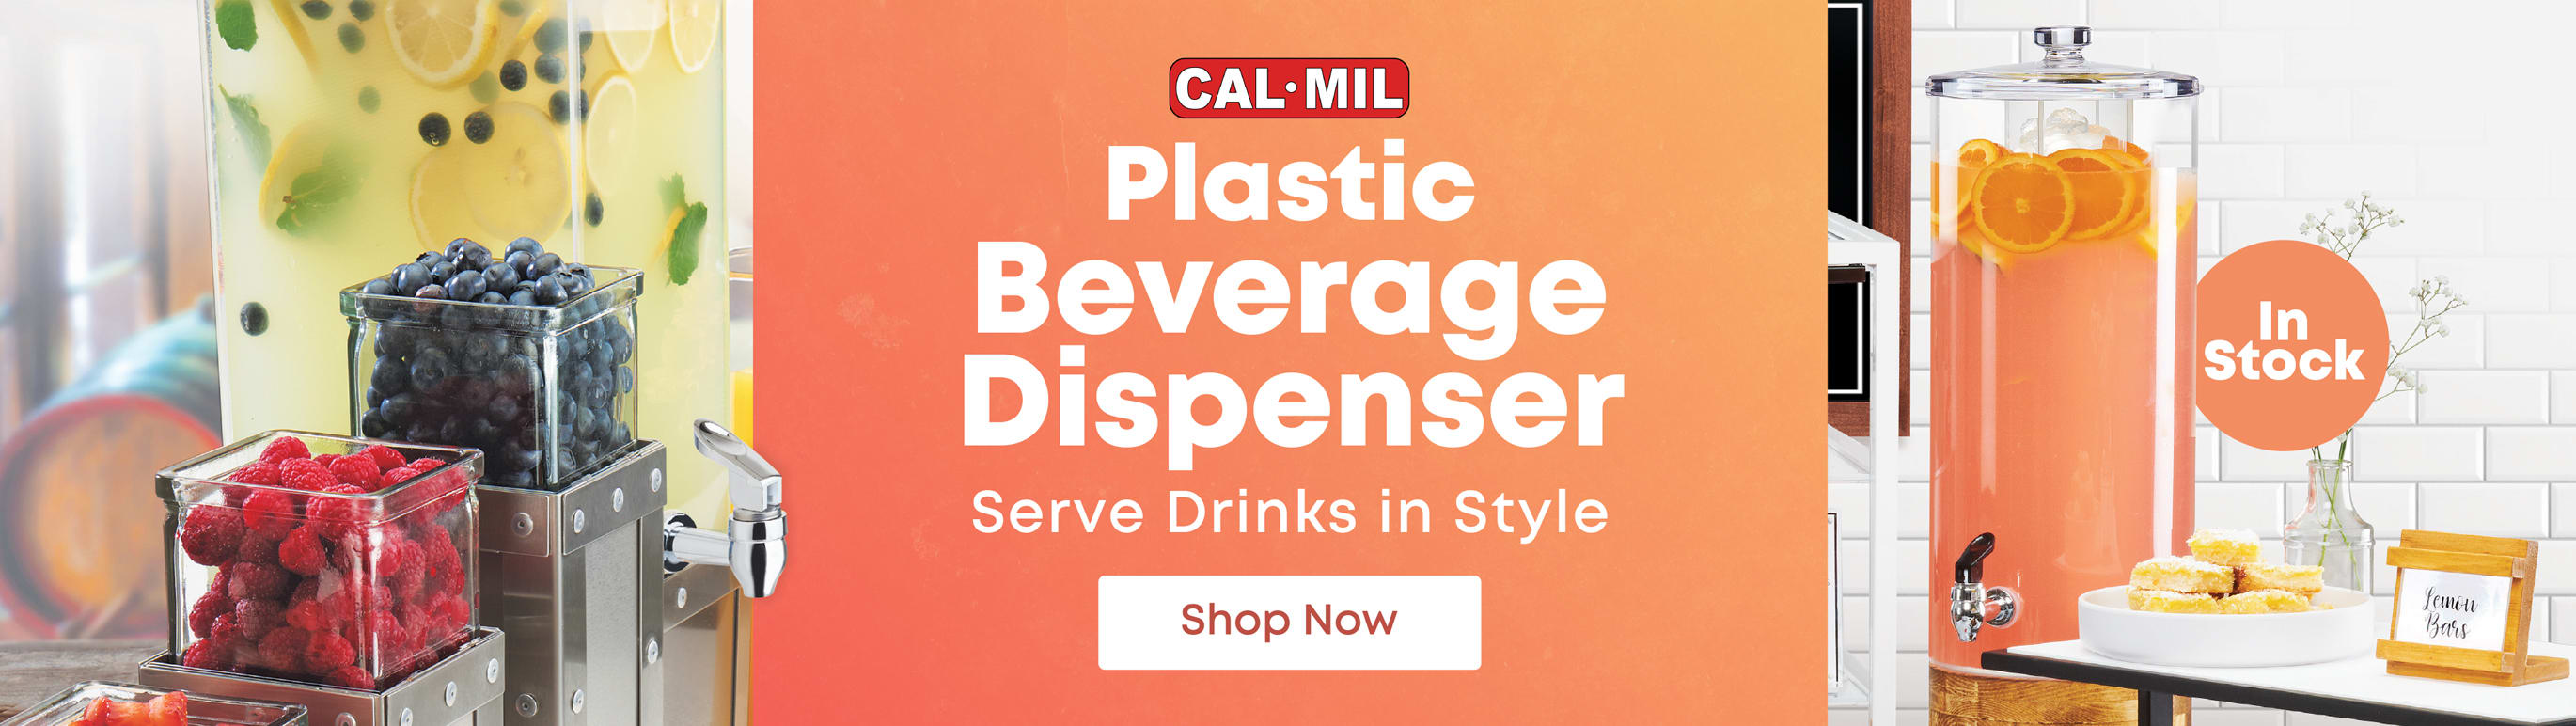 Cal-Mil Plastic Beverage Dispenser